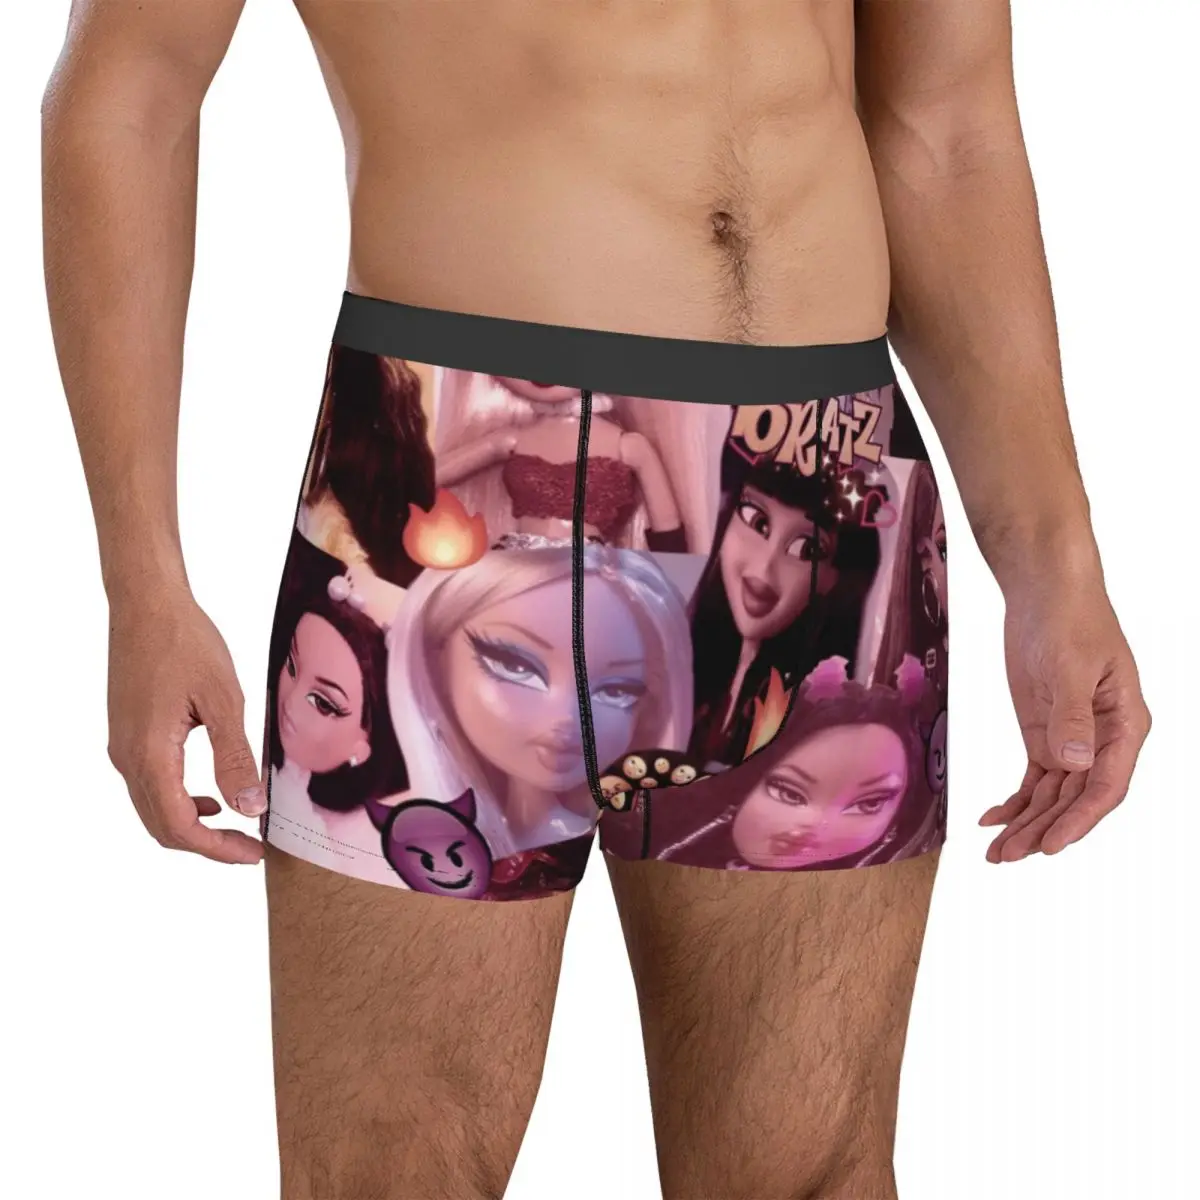 

Bratz Underwear makeup angel style feminsim fashion Design Boxer Shorts Trenky Man Underpants Cute Shorts Briefs Gift Idea